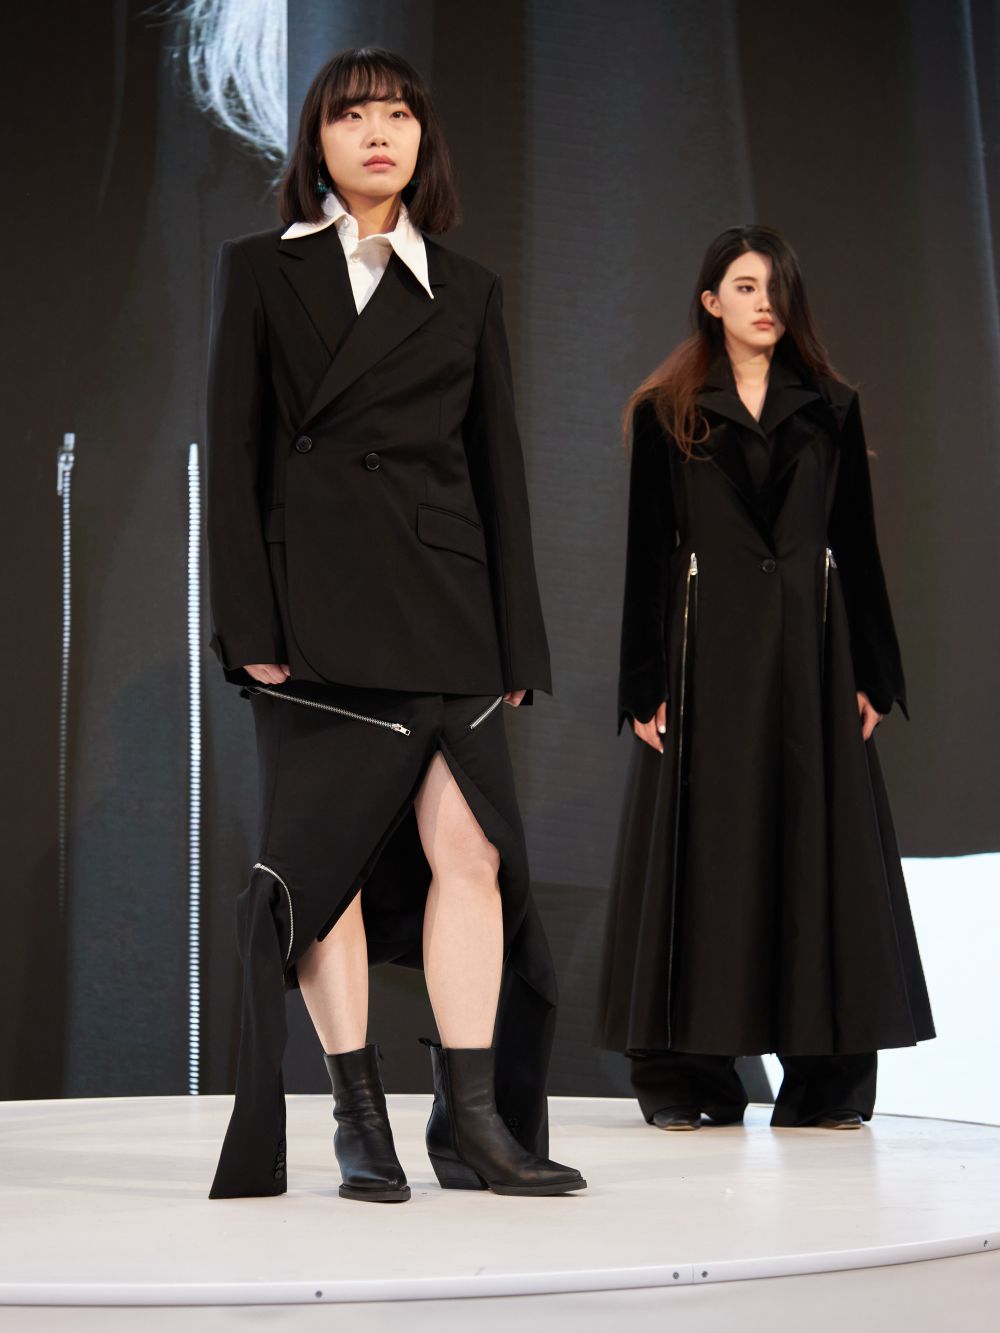 Models wearing black suits